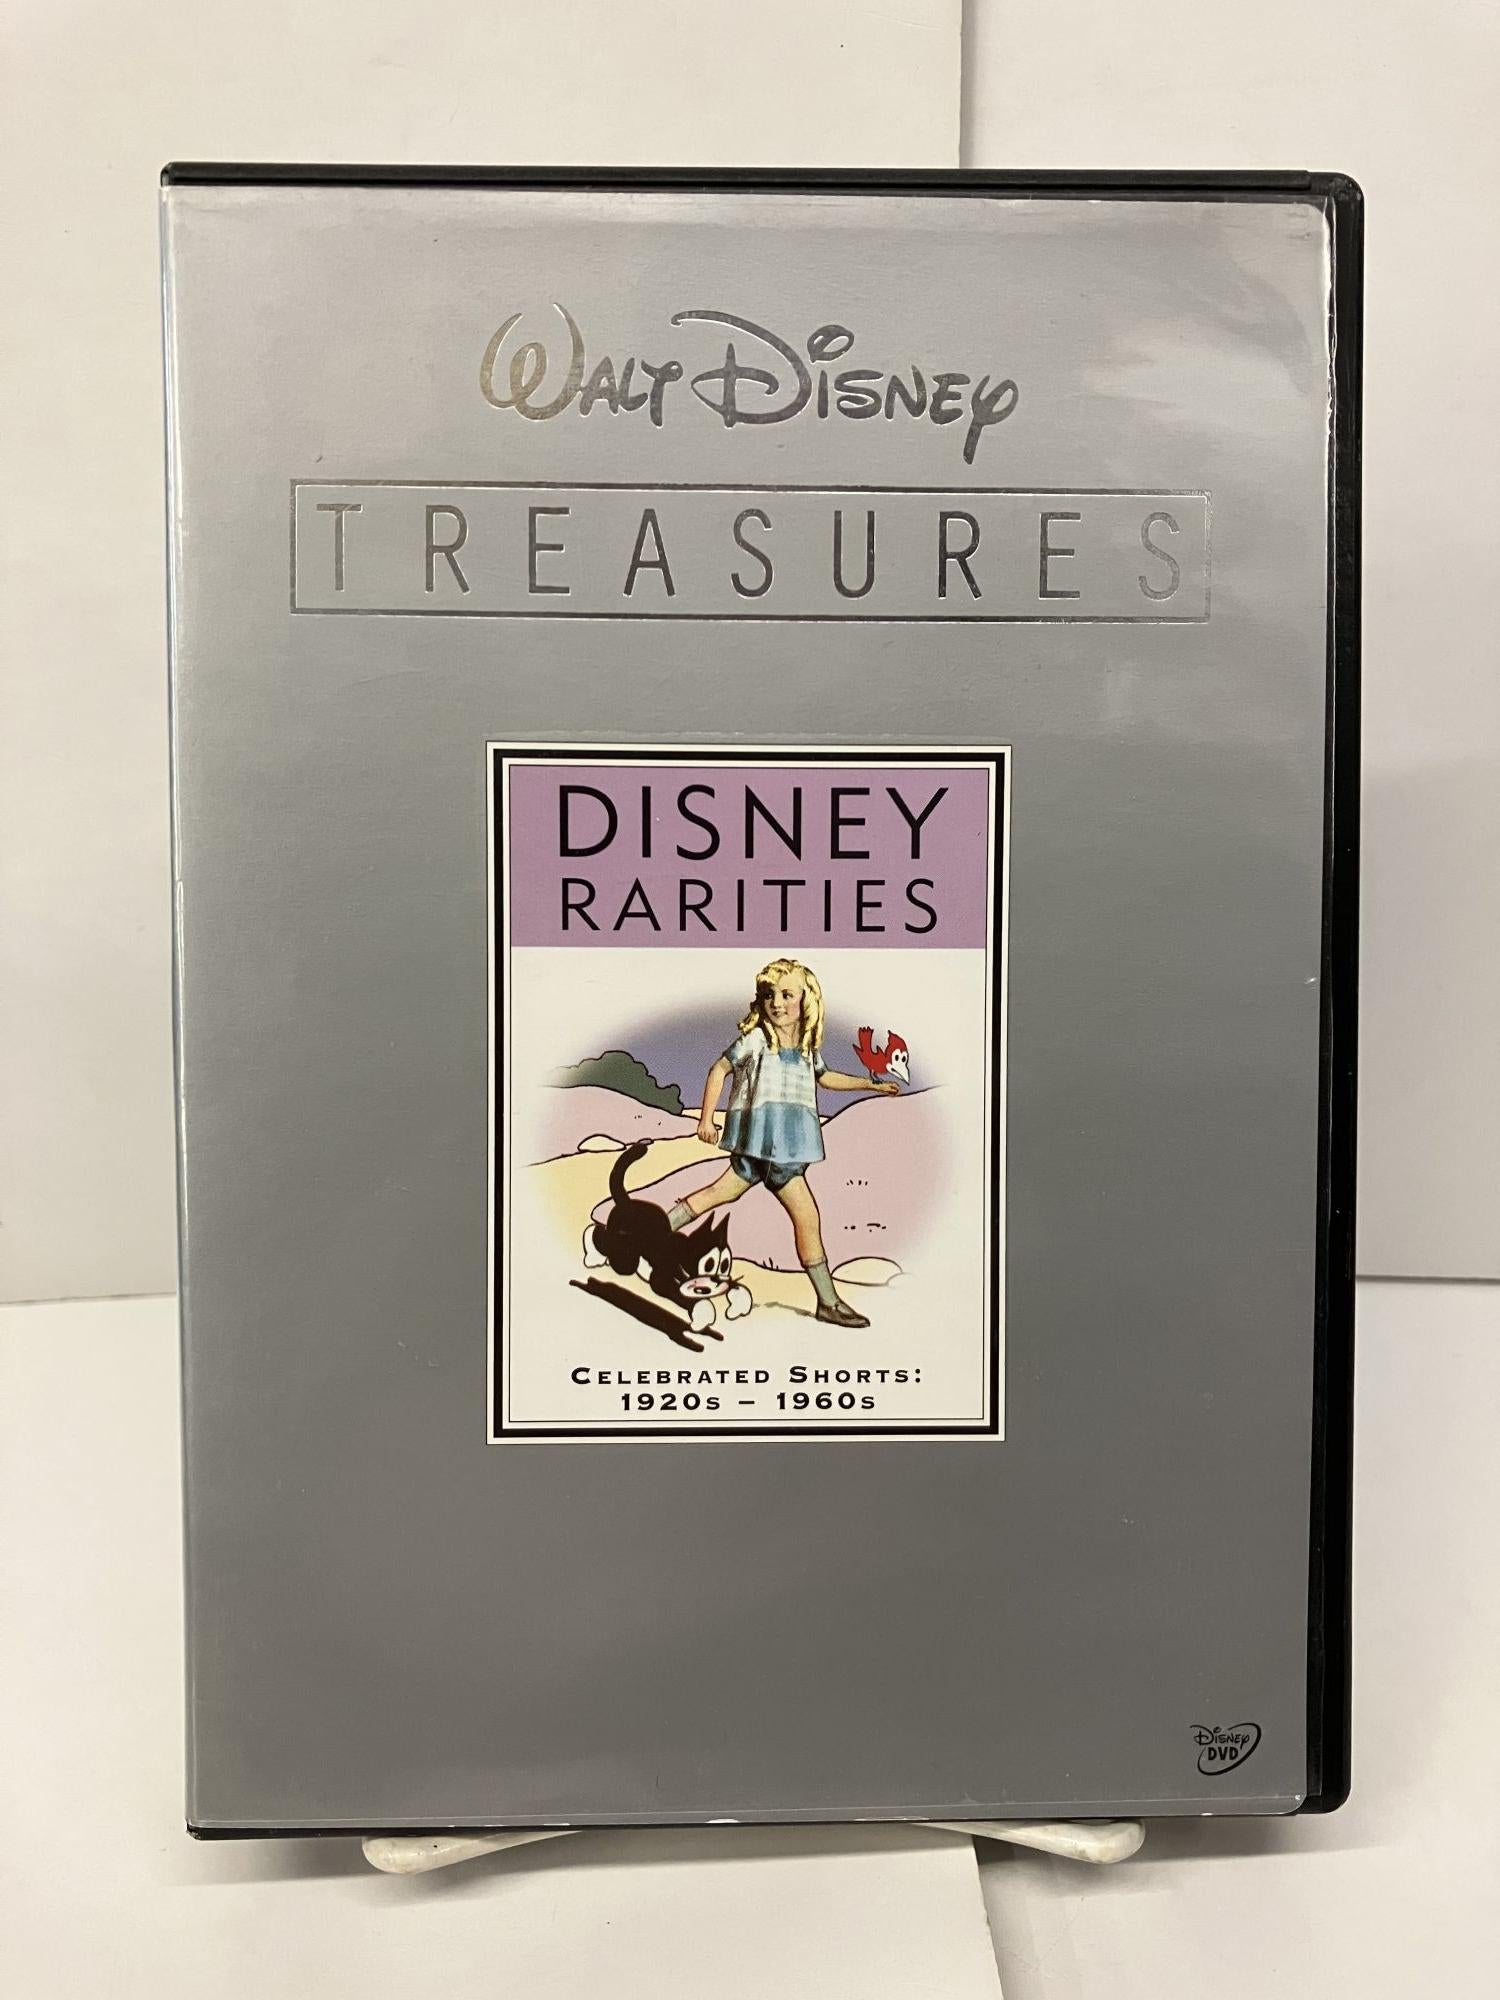 Walt Disney Treasures: Disney Rarities - Celebrated Shorts 1920s-1960s